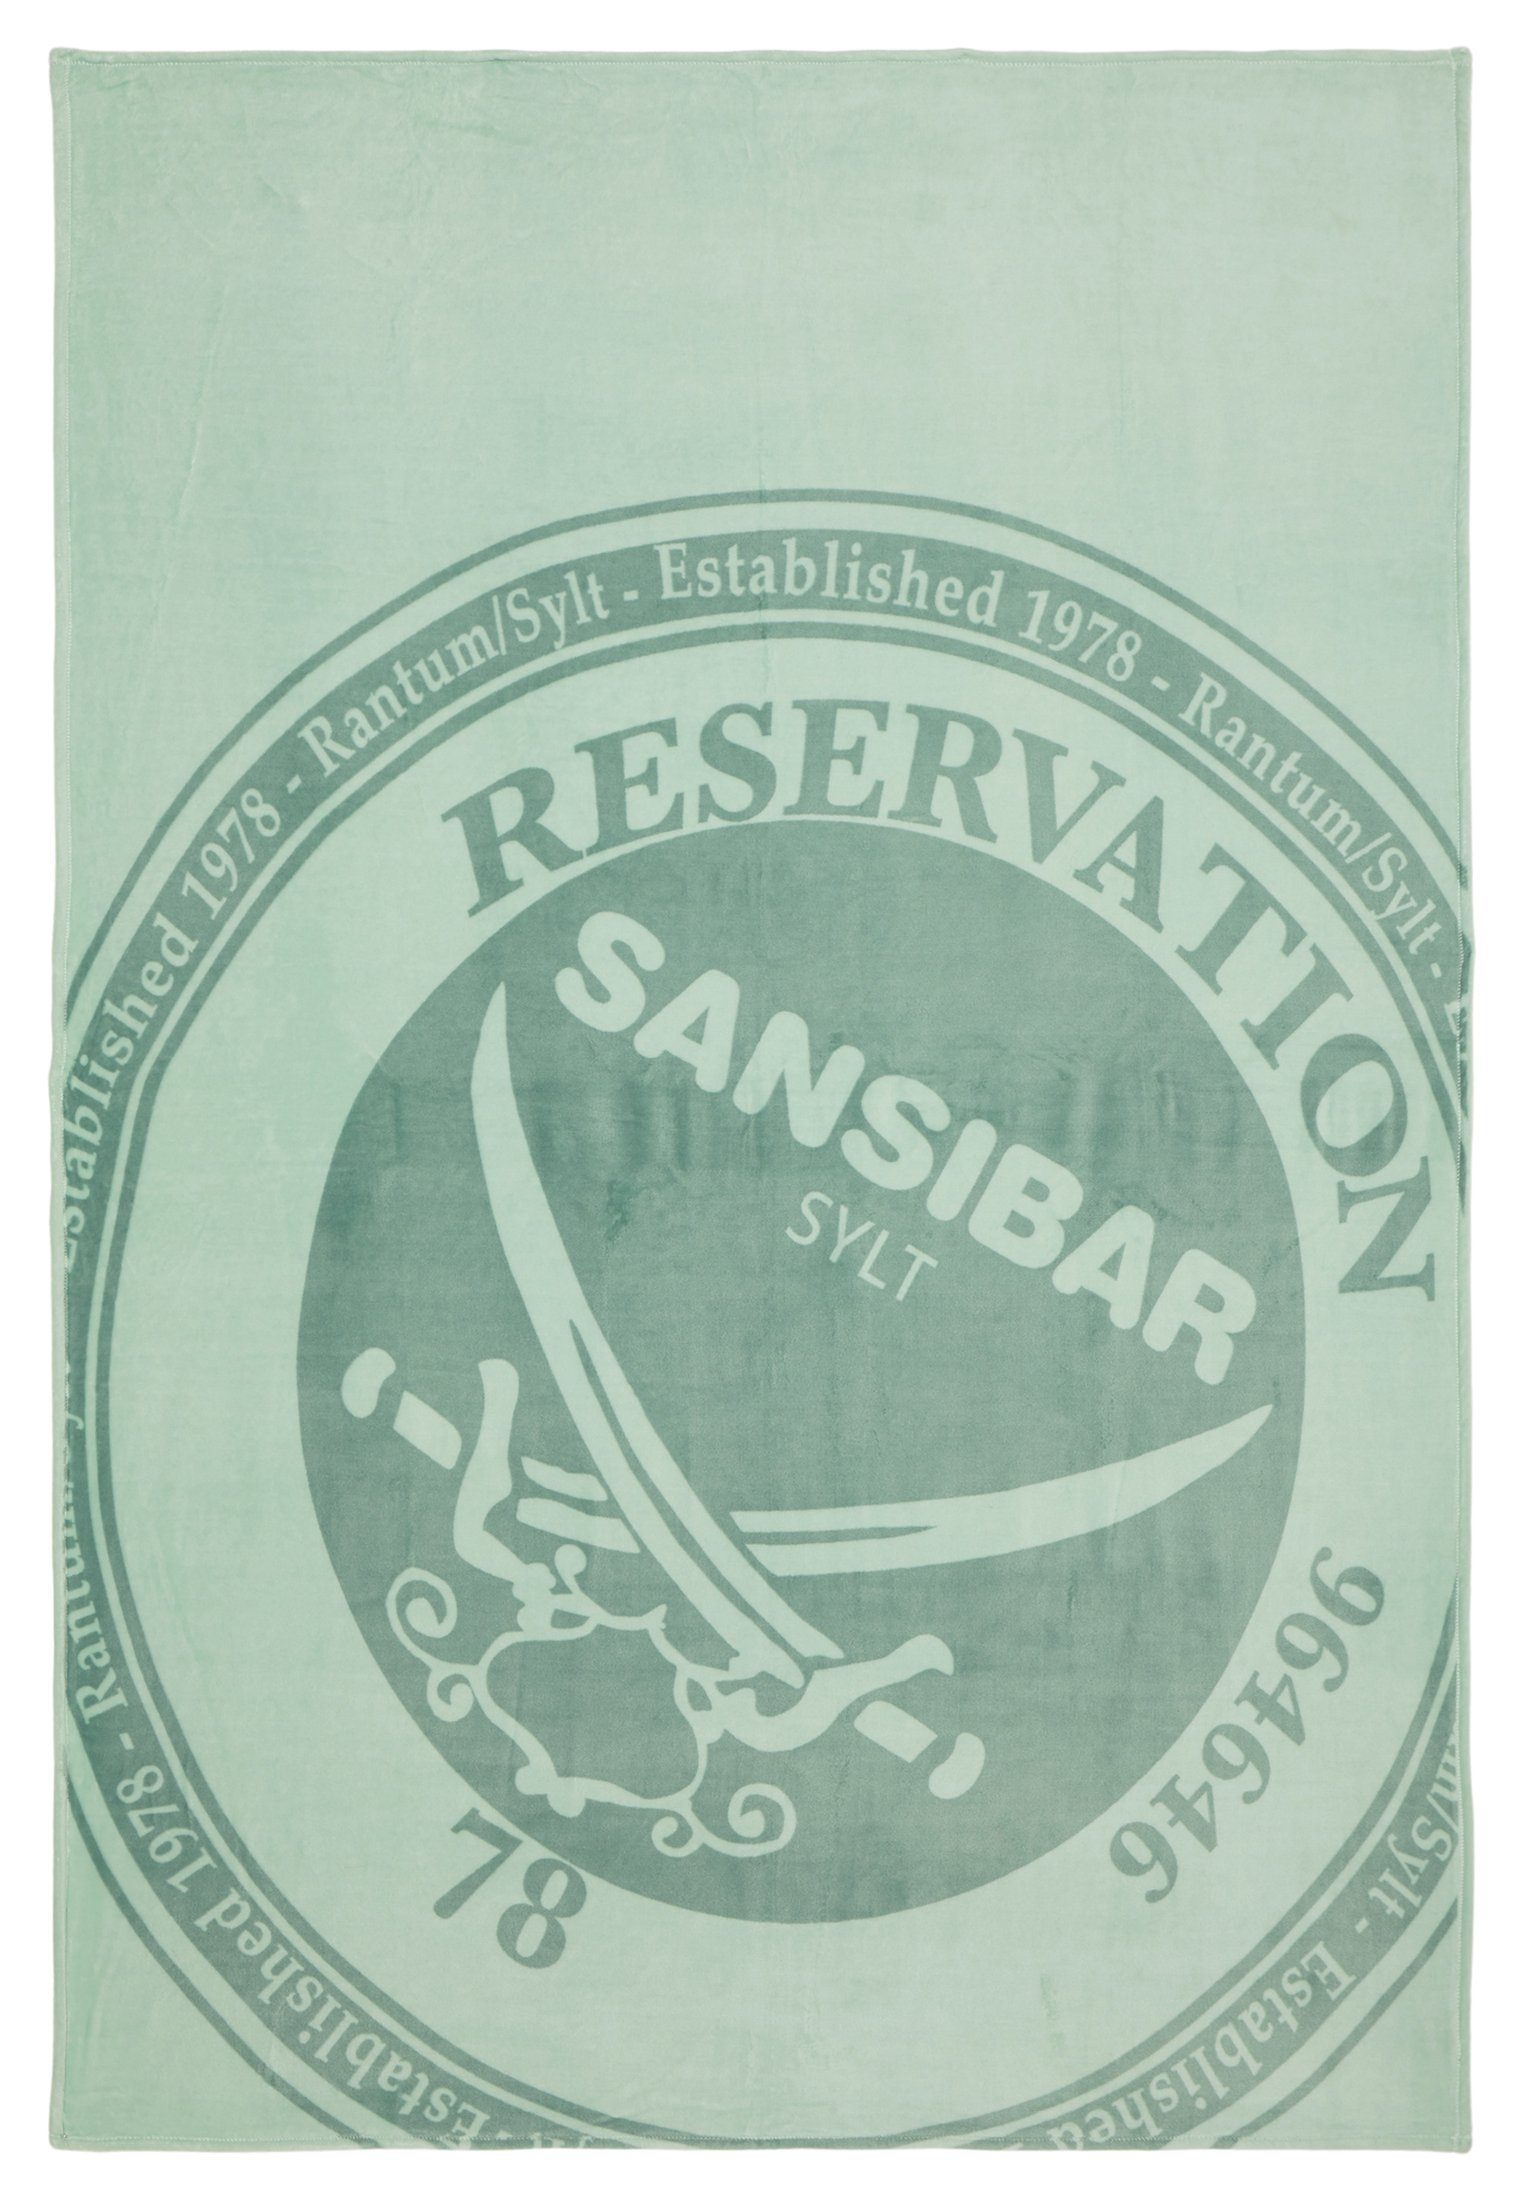 Wohndecke Plaid Wohndecke Sansibar Reservation Design Kuscheldecke mit dekorativem Sansibar Logo Druck, 150x200 cm, Sansibar Sylt, pflegeleicht, Sansibar Sylt light green